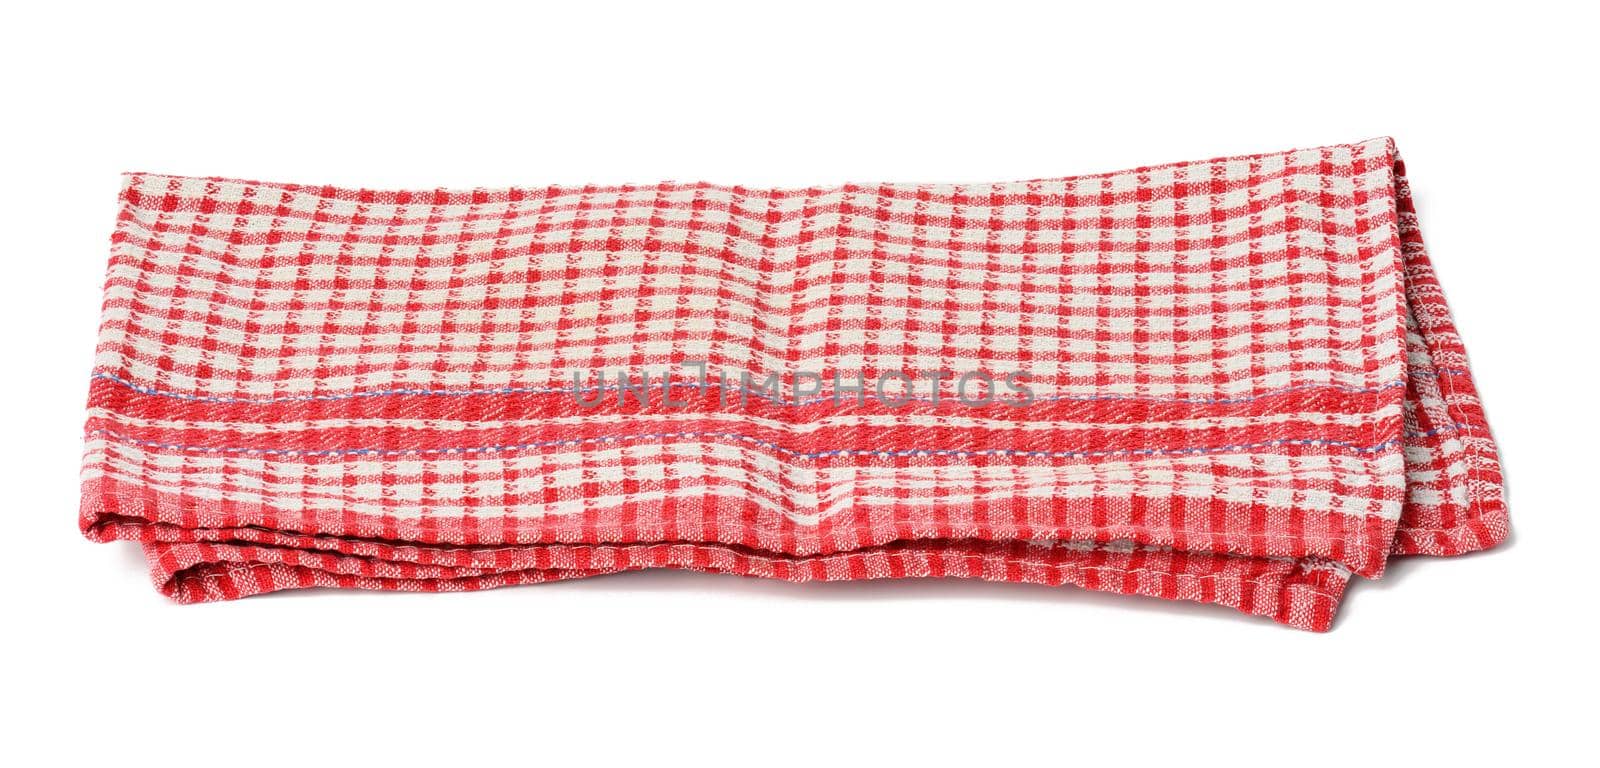 folded cotton red white checkered napkin on a white background by ndanko